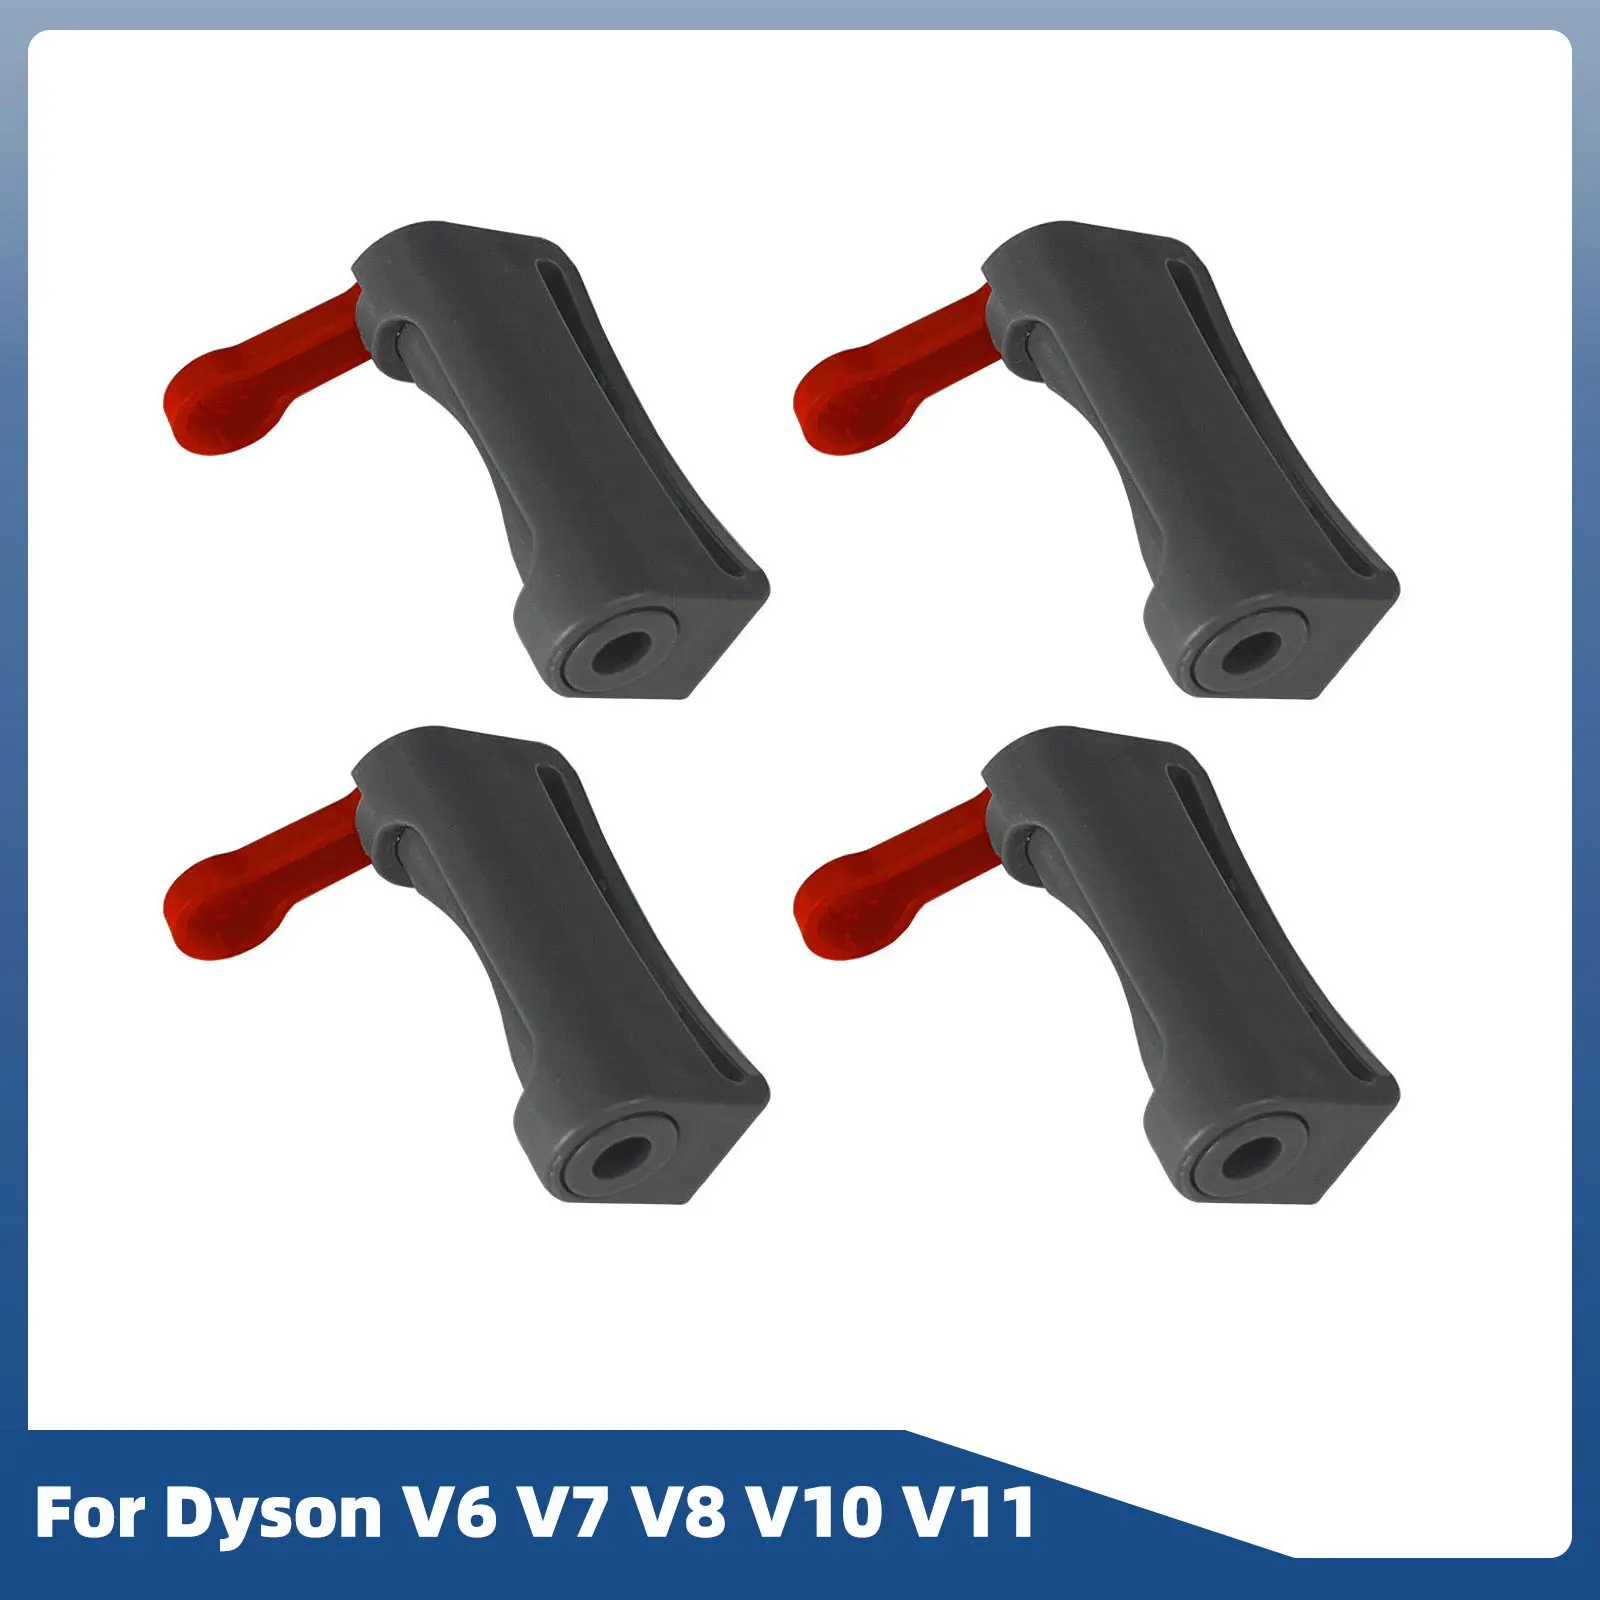 Replacement For Dyson V6 V7 V8 V10 V11 Vacuum Cleaner Spare Parts Trigger Lock Power Button Lock